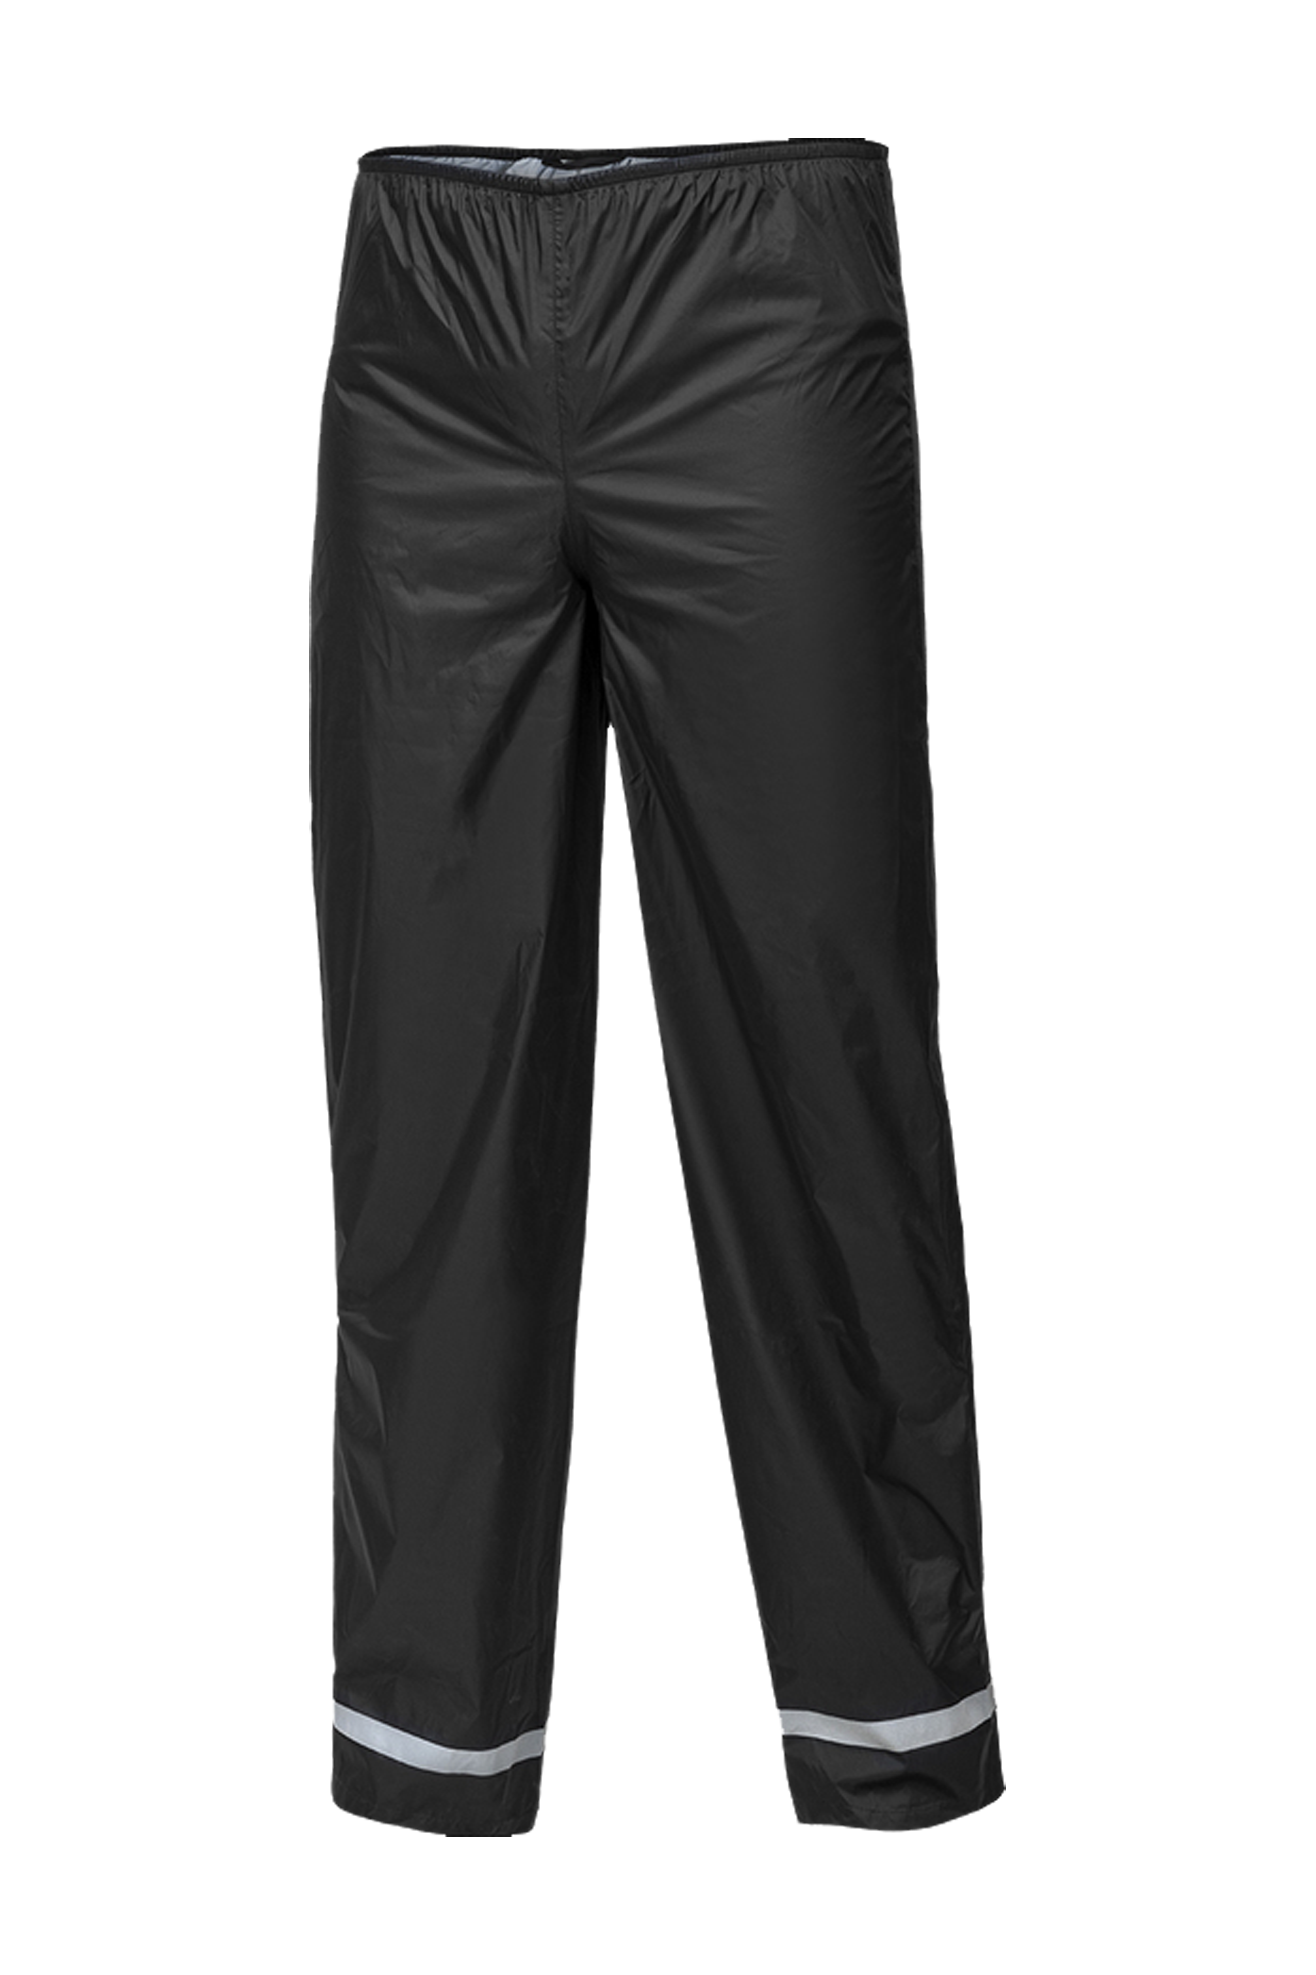 iXS Pantalones Impermeables  Light Negro